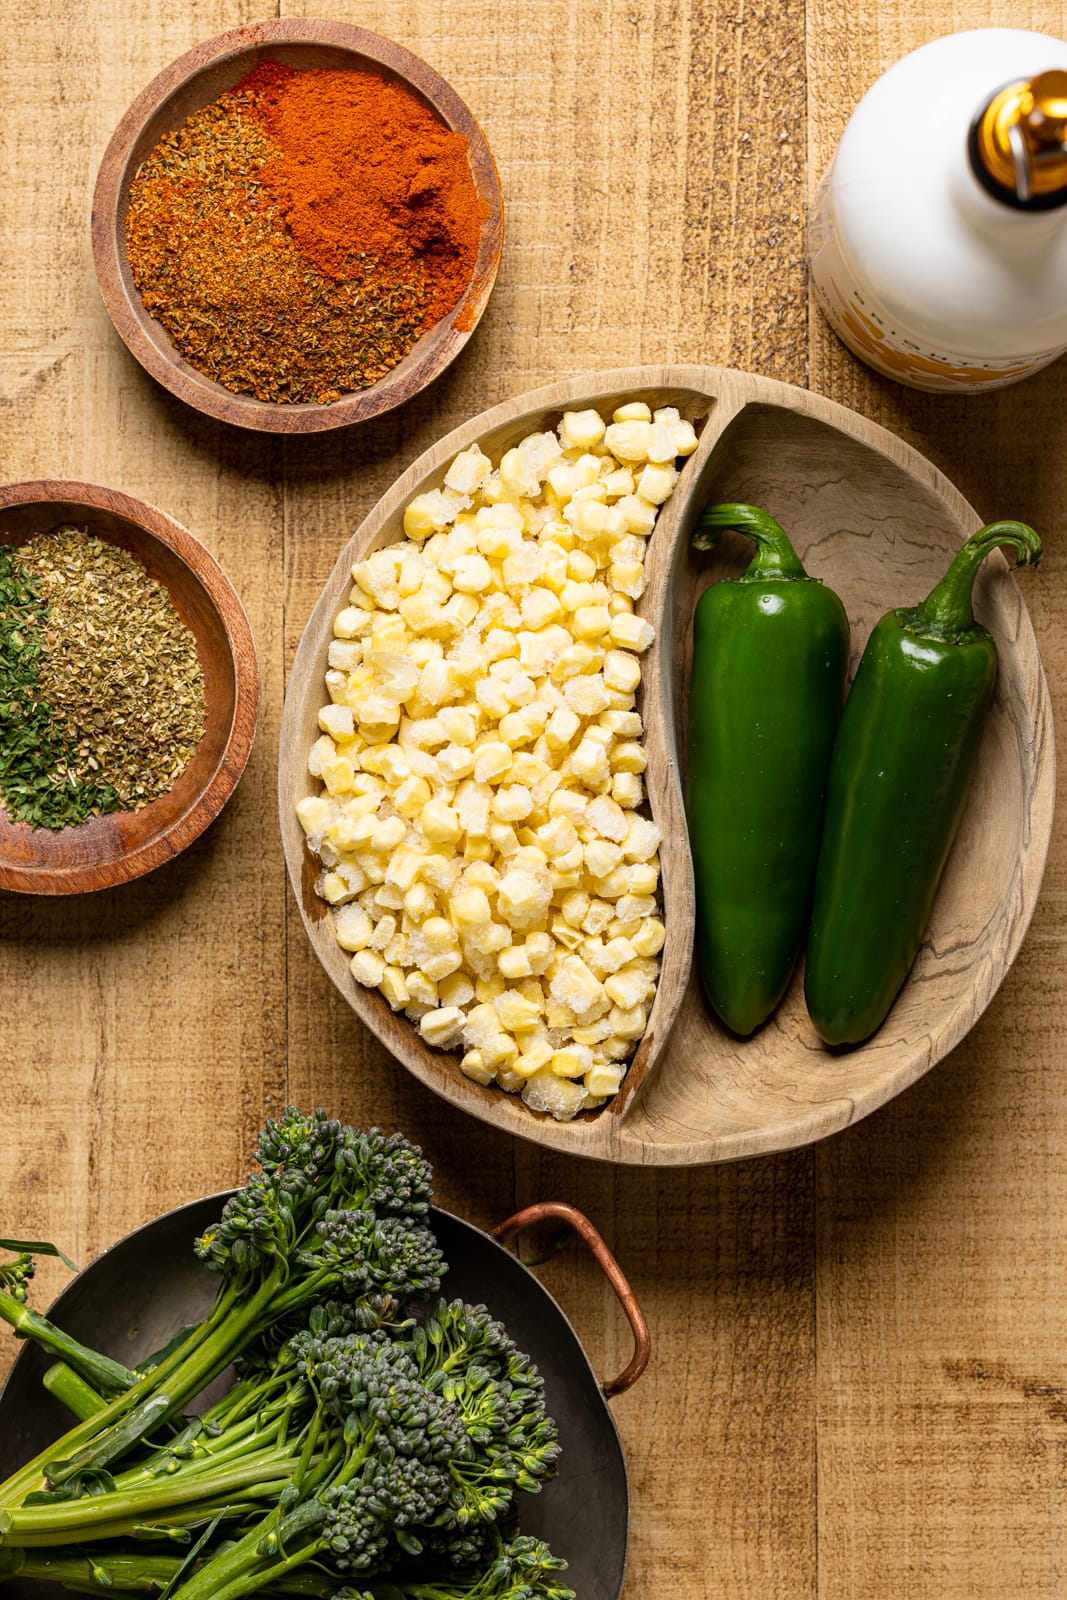 Ingredients of salad on a brown wood table including broccolini, jalapeños, corn, seasonings and herbs.